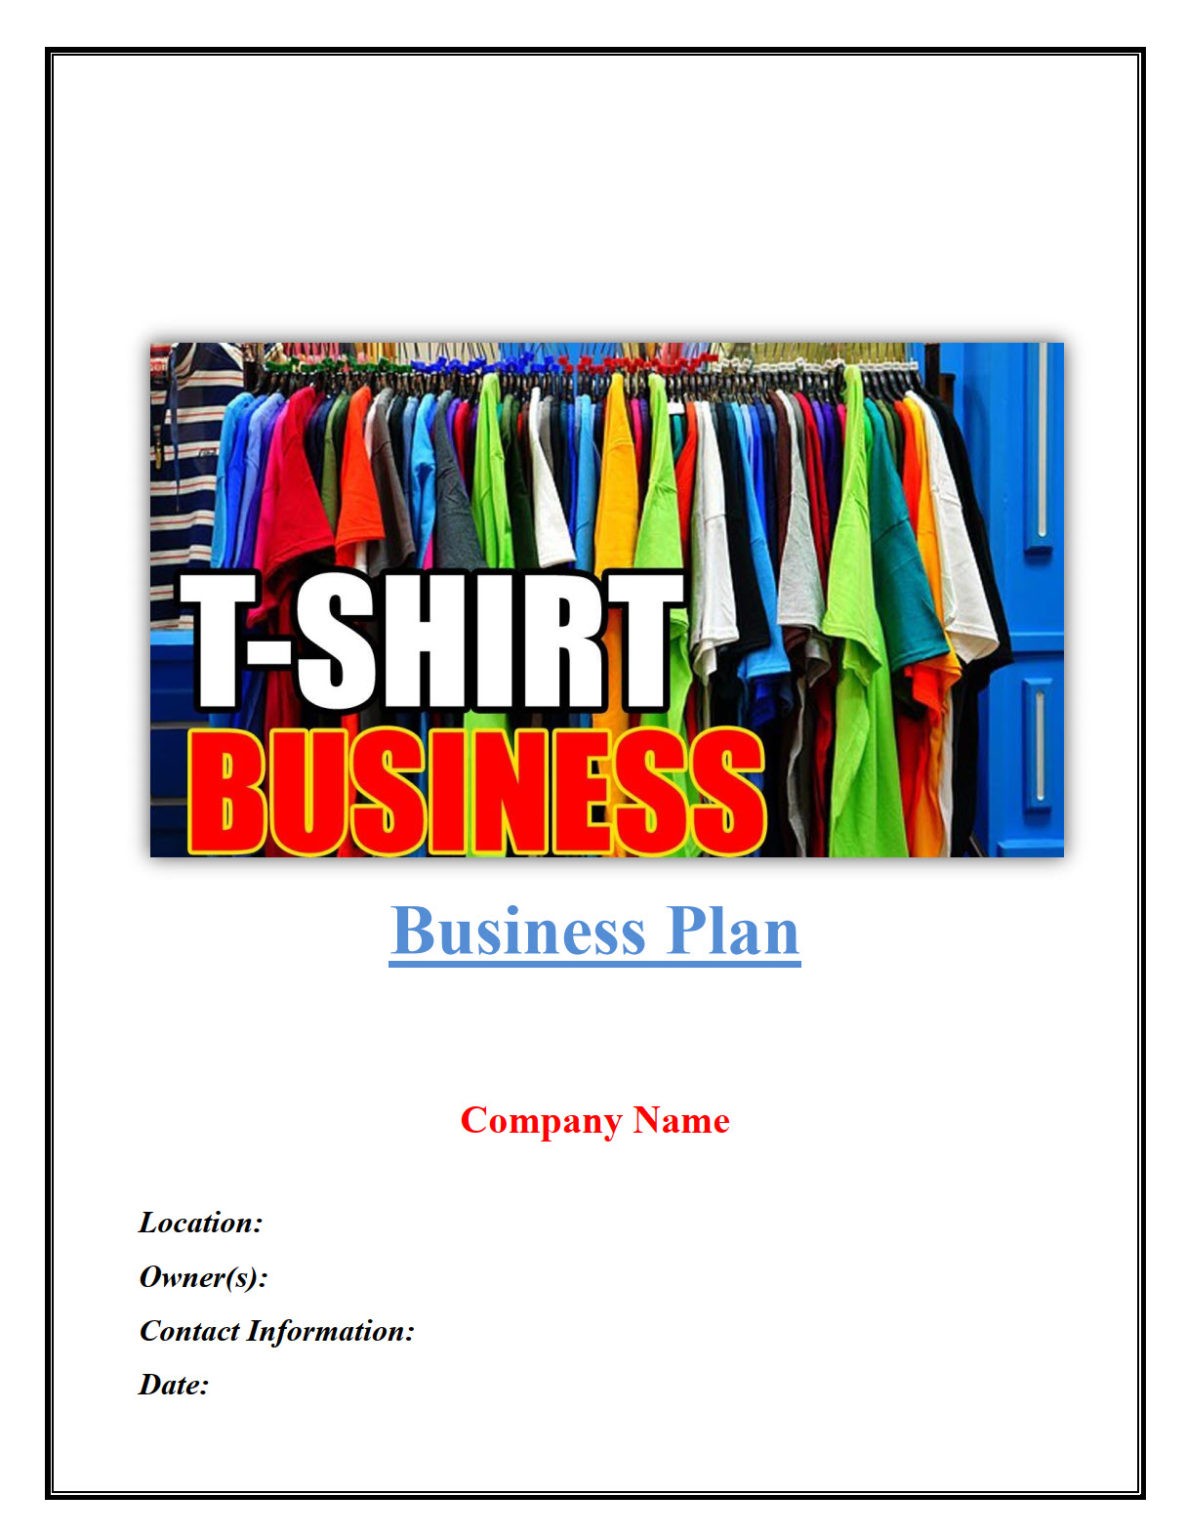 t shirt screen printing business plan